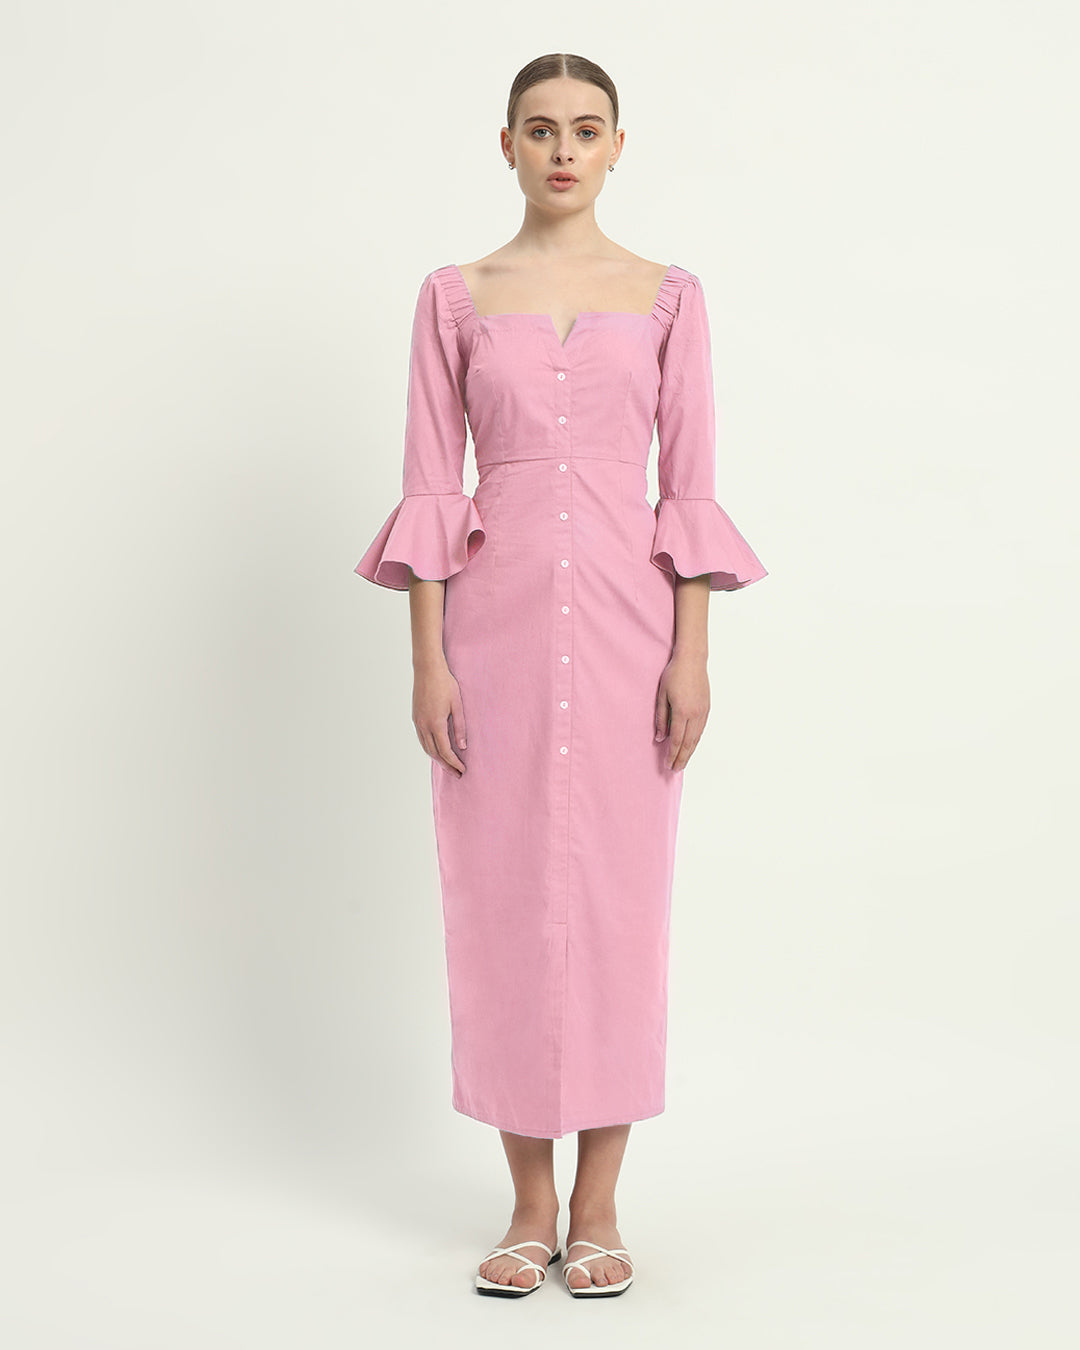 The Rosendale Fondant Pink Cotton Dress